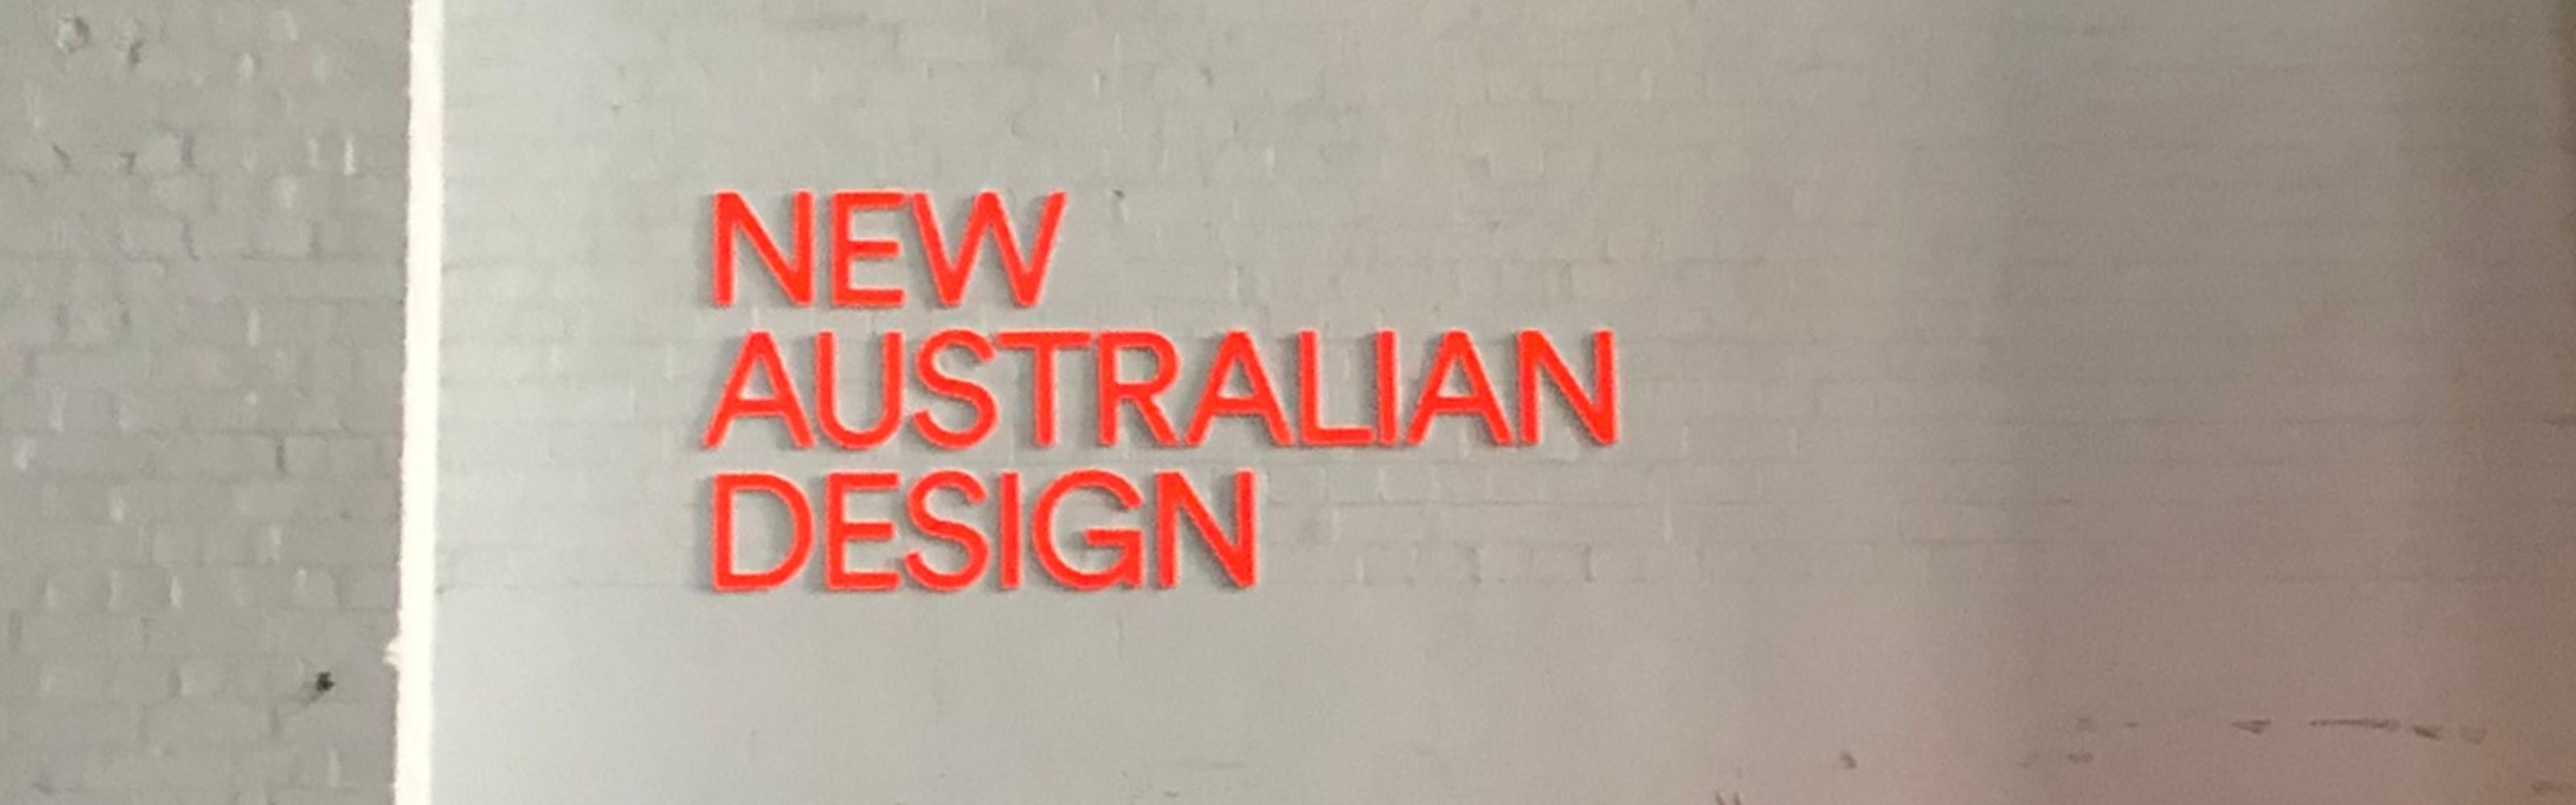 New Australian Design Exhibition sign at Sydney's Powerhouse Museum